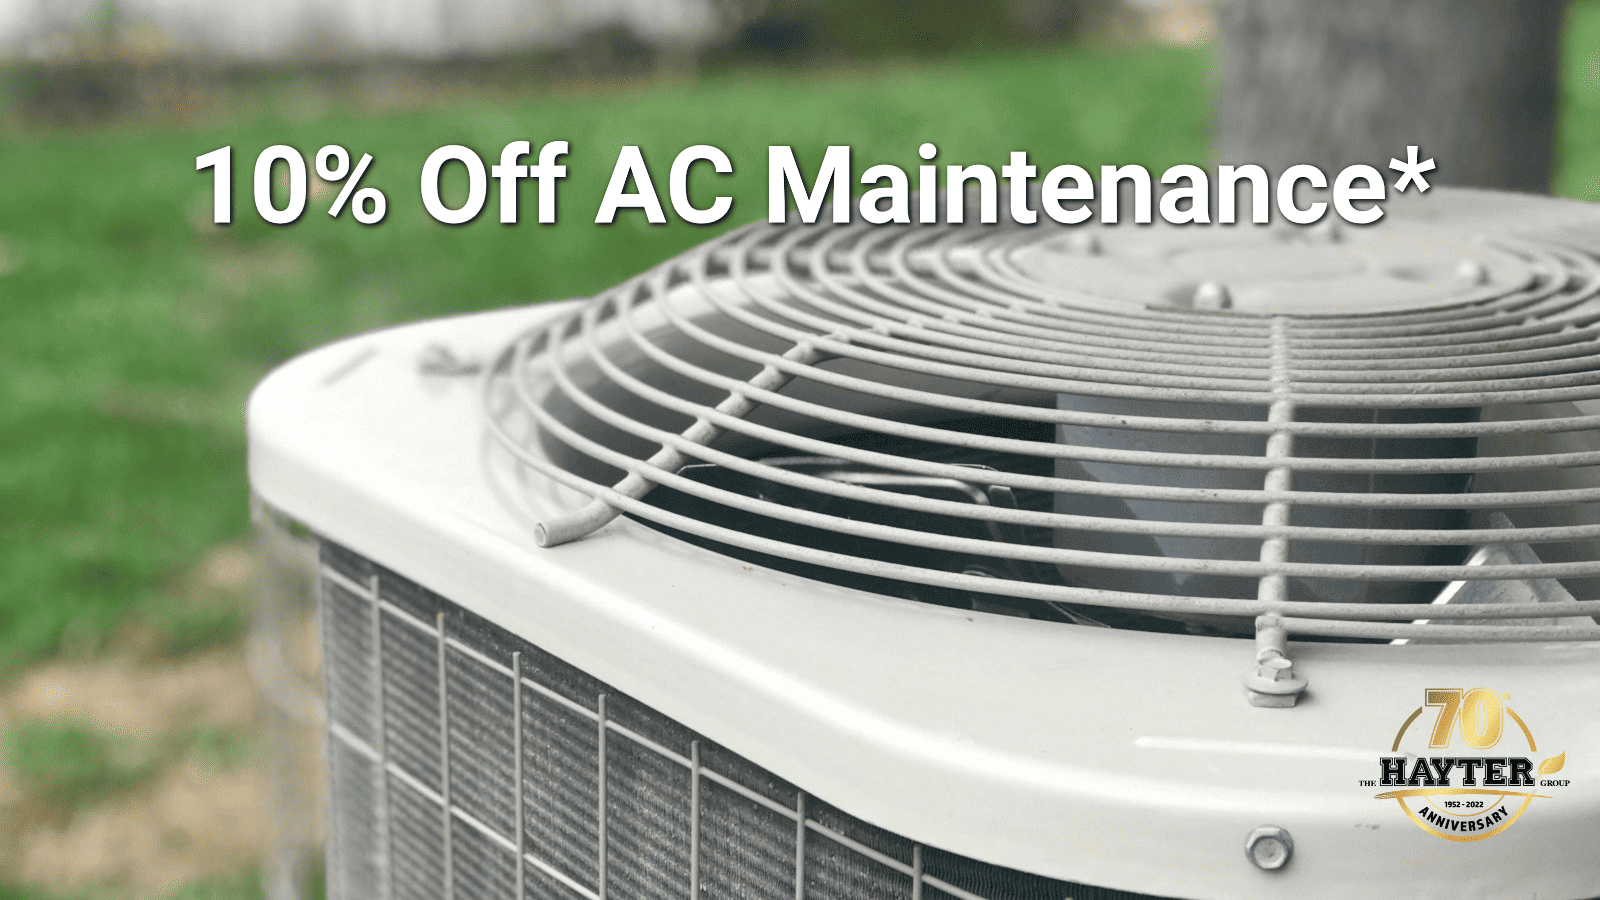 10% Off AC Maintenance - The Hayter Group